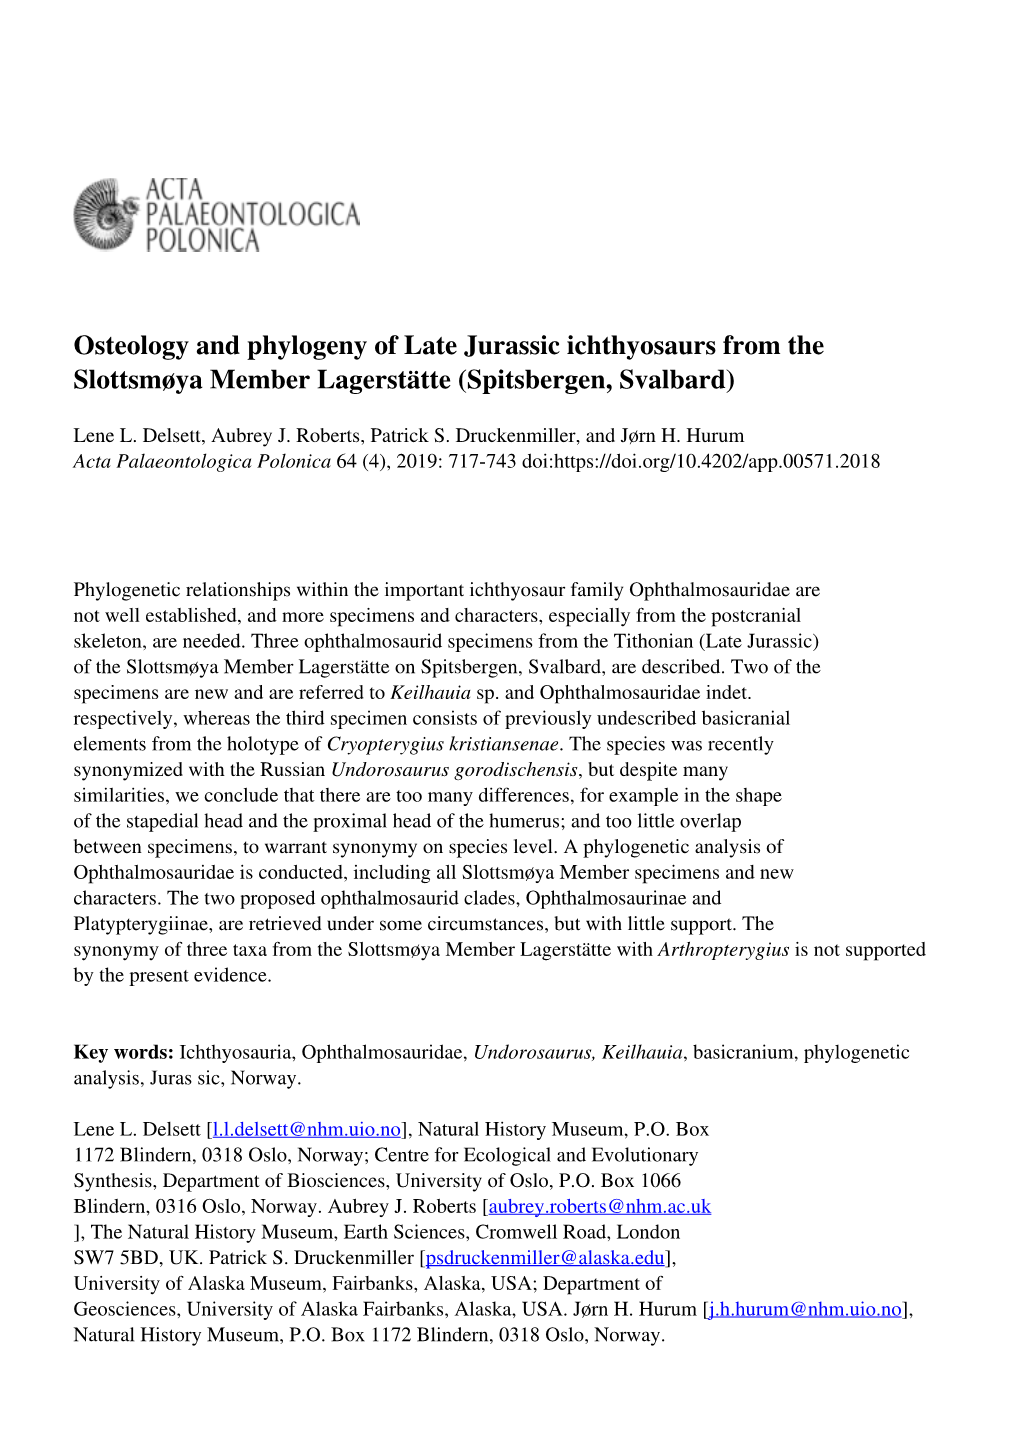 Osteology and Phylogeny of Late Jurassic Ichthyosaurs from the Slottsmøya Member Lagerstätte (Spitsbergen, Svalbard)